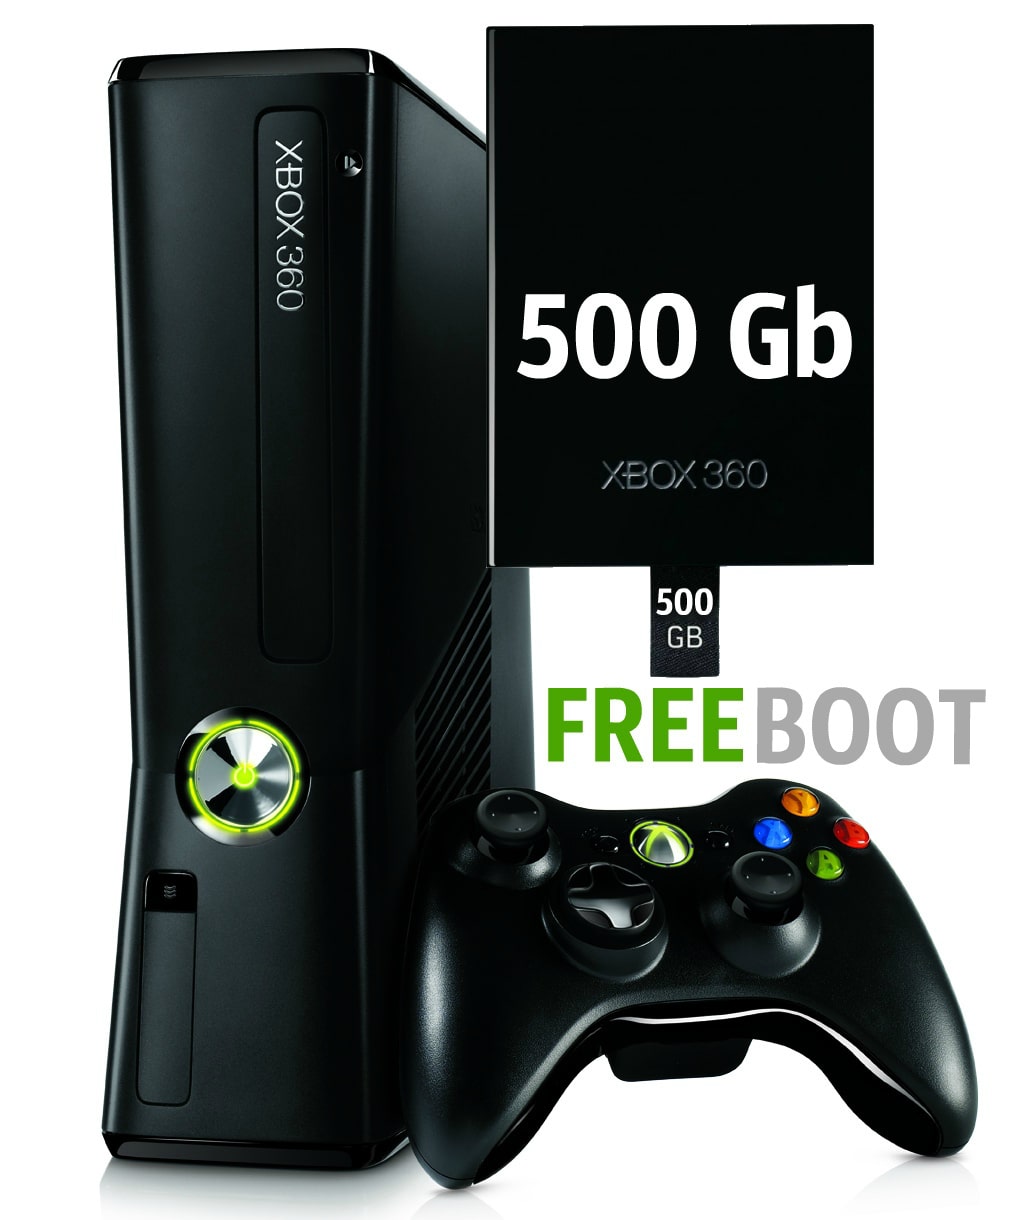 Xbox 360 S 500 Gb Freeboot (450 игр на HDD)